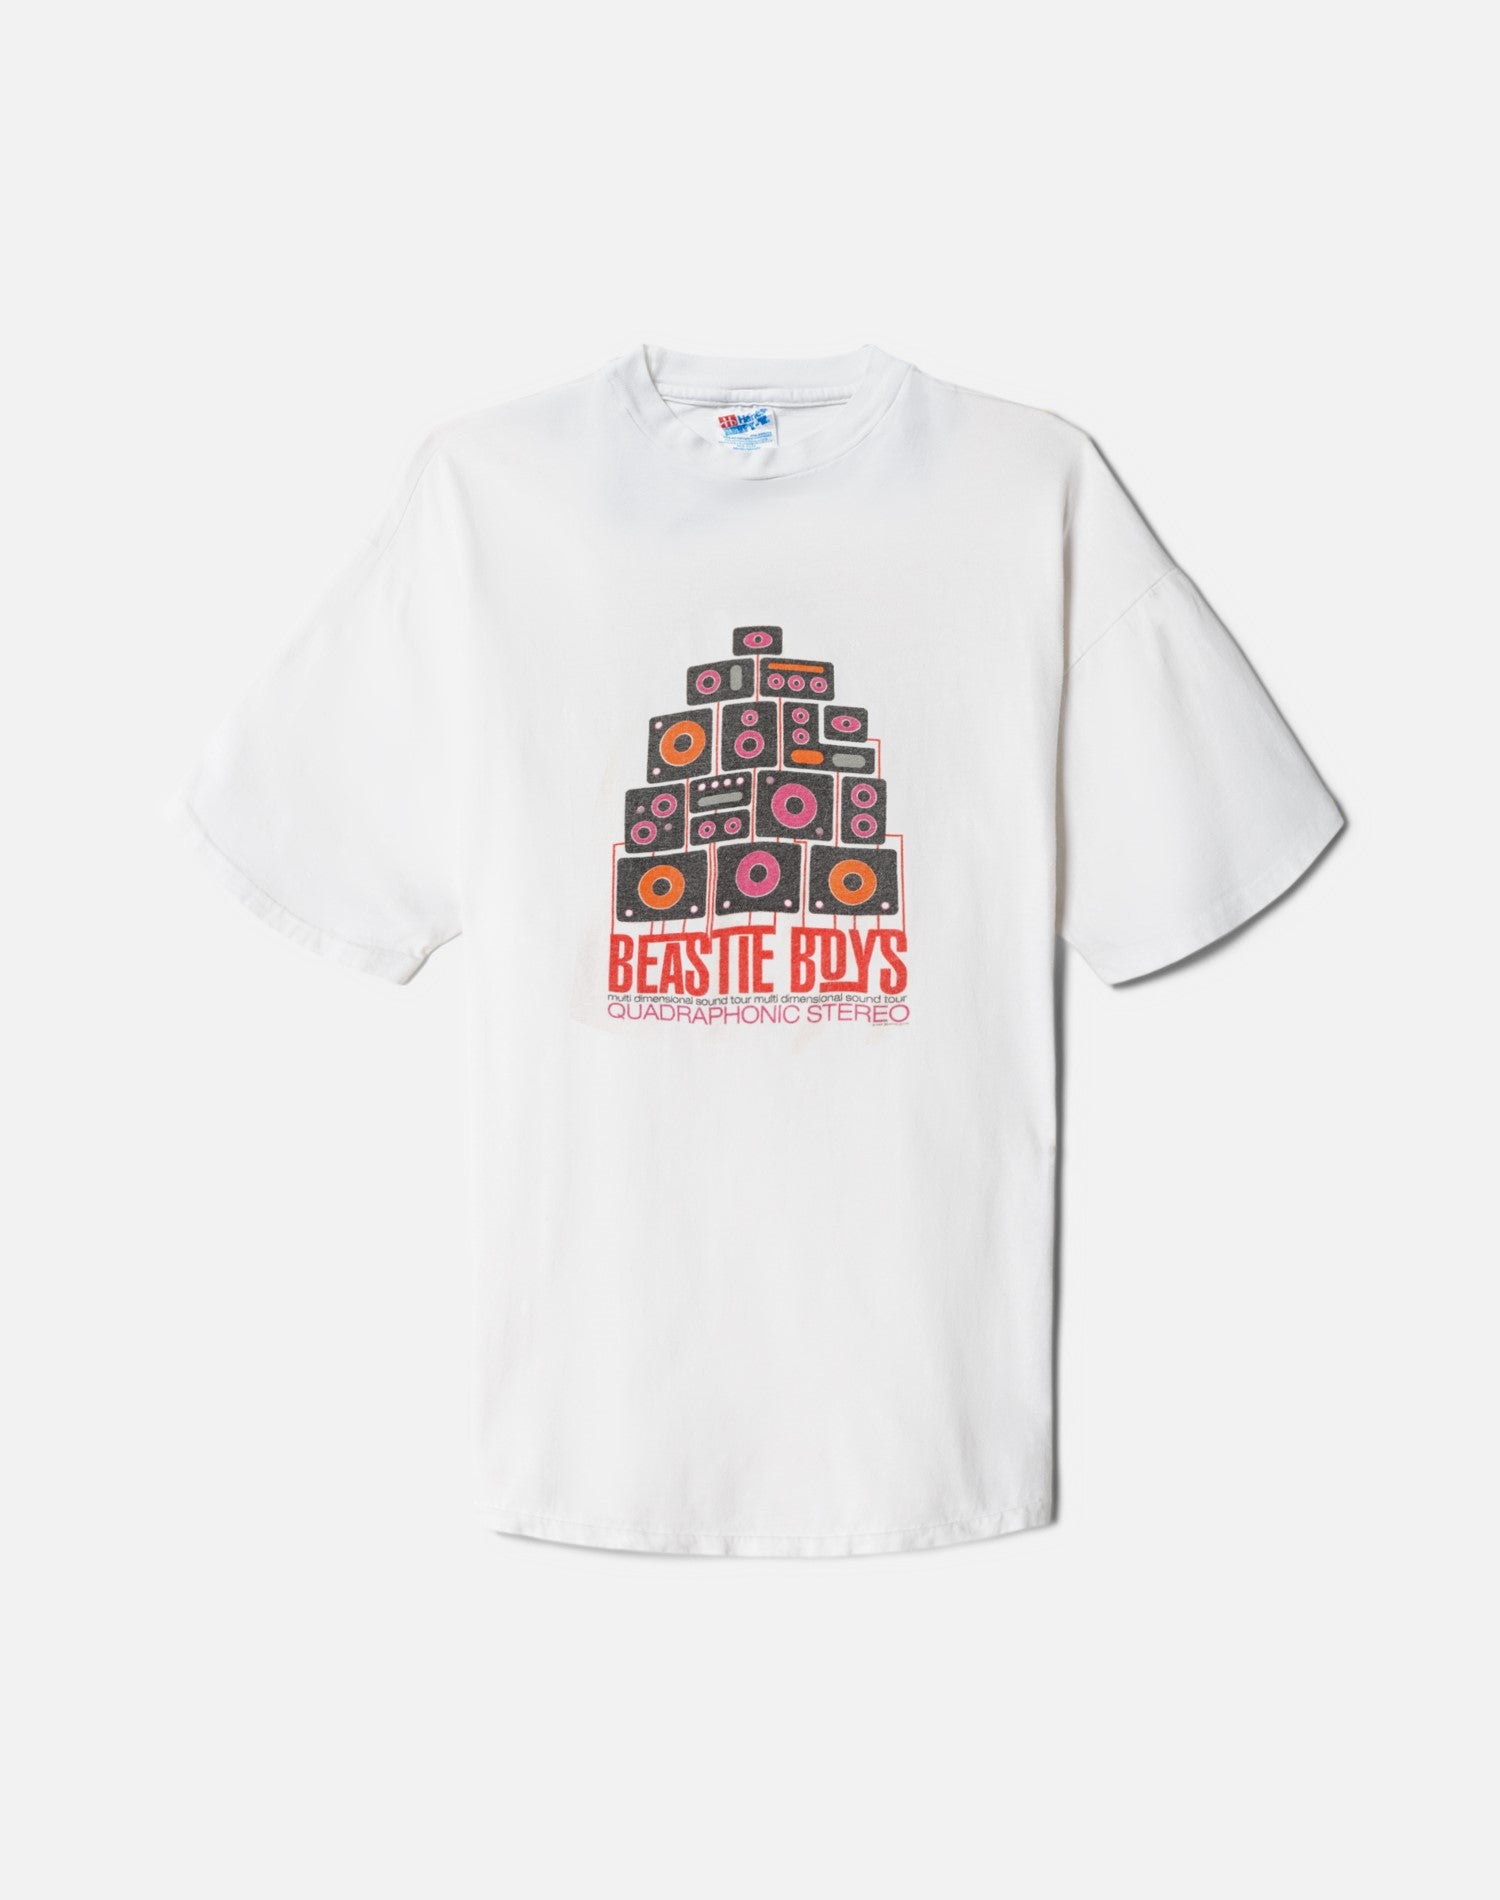 1996 Hanes Beastie Boys Tee -#28